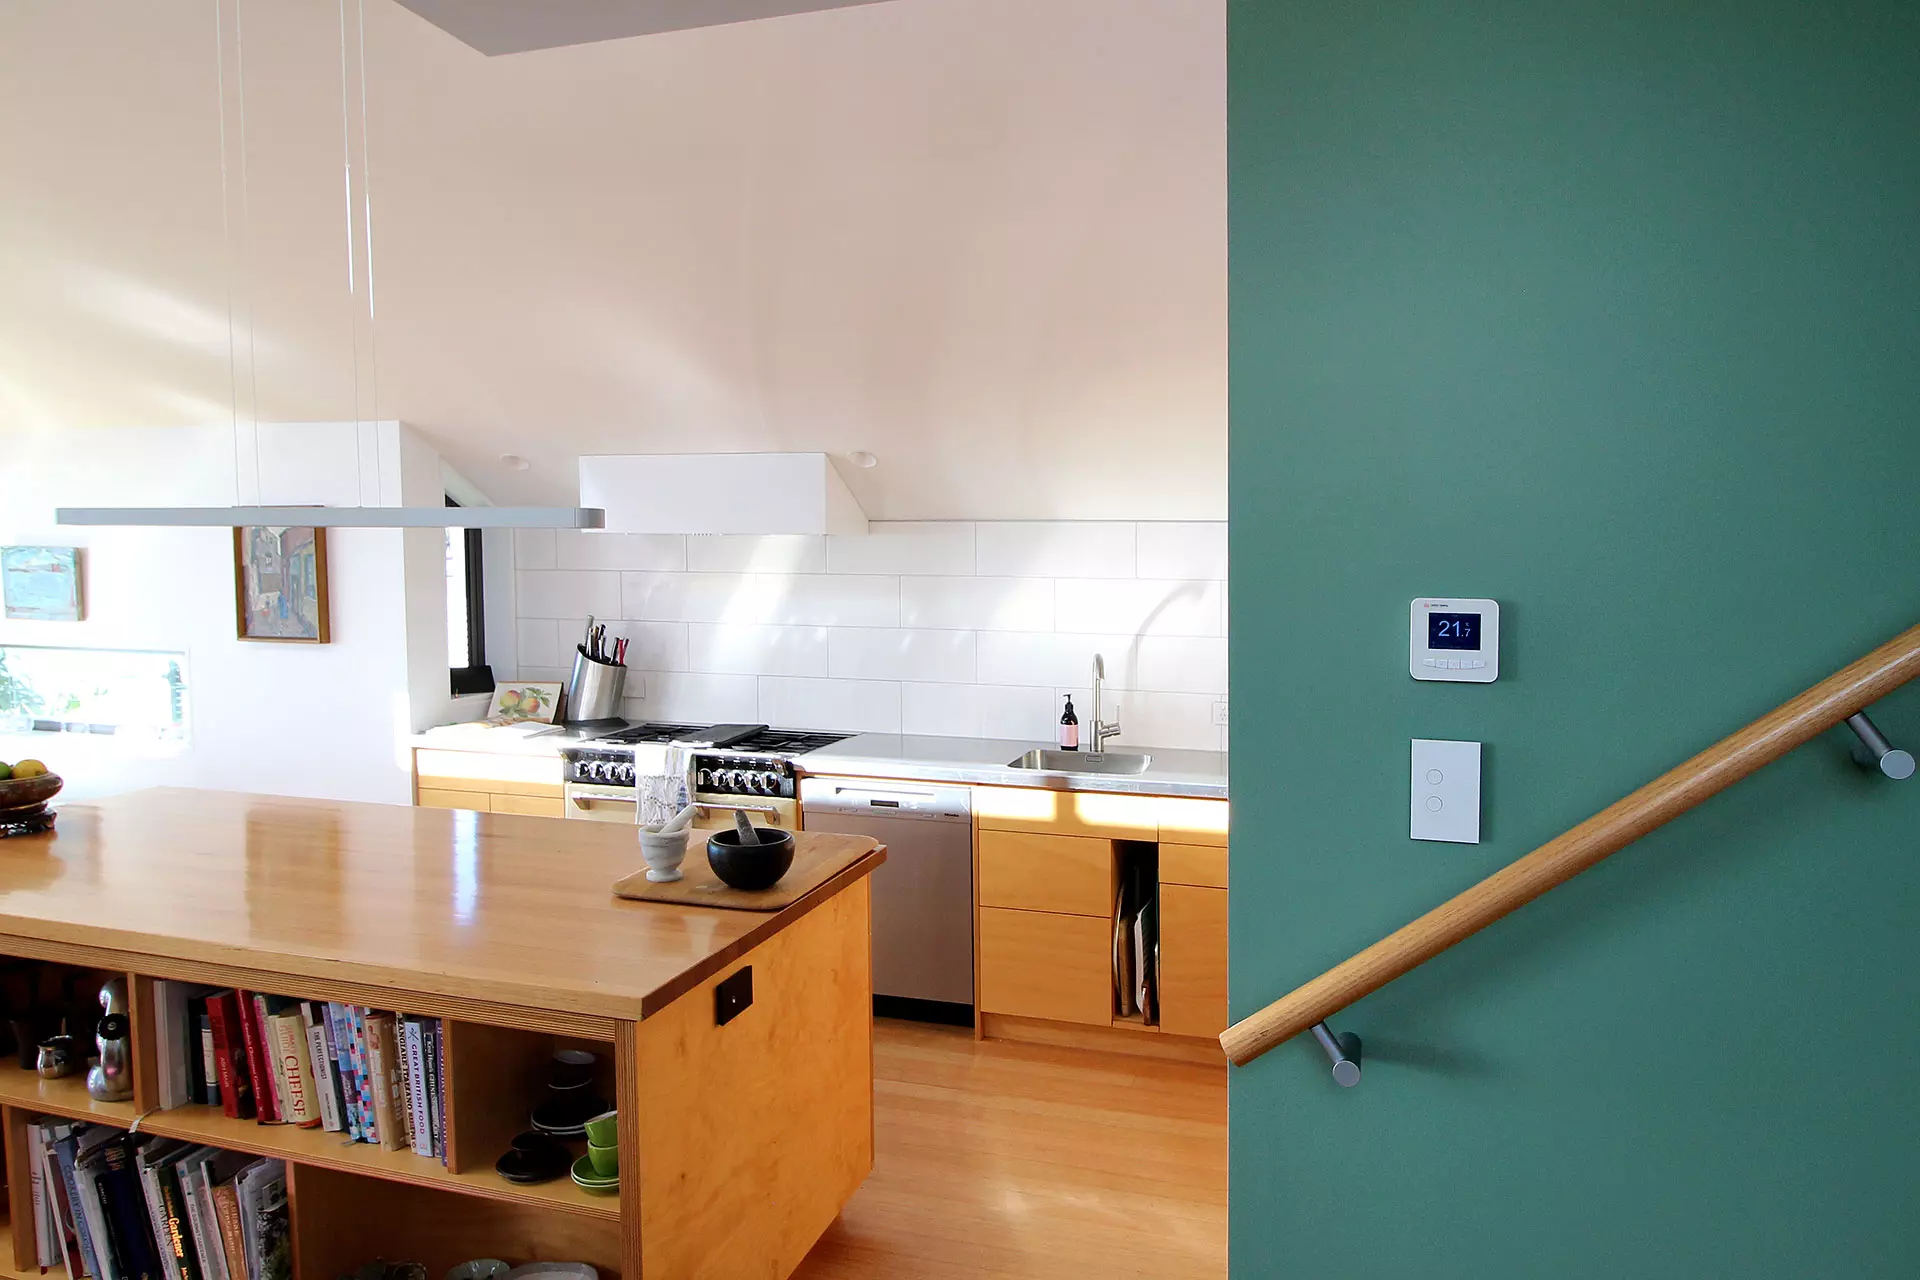 Heating Modern Architectural Build Controller in Kitchen